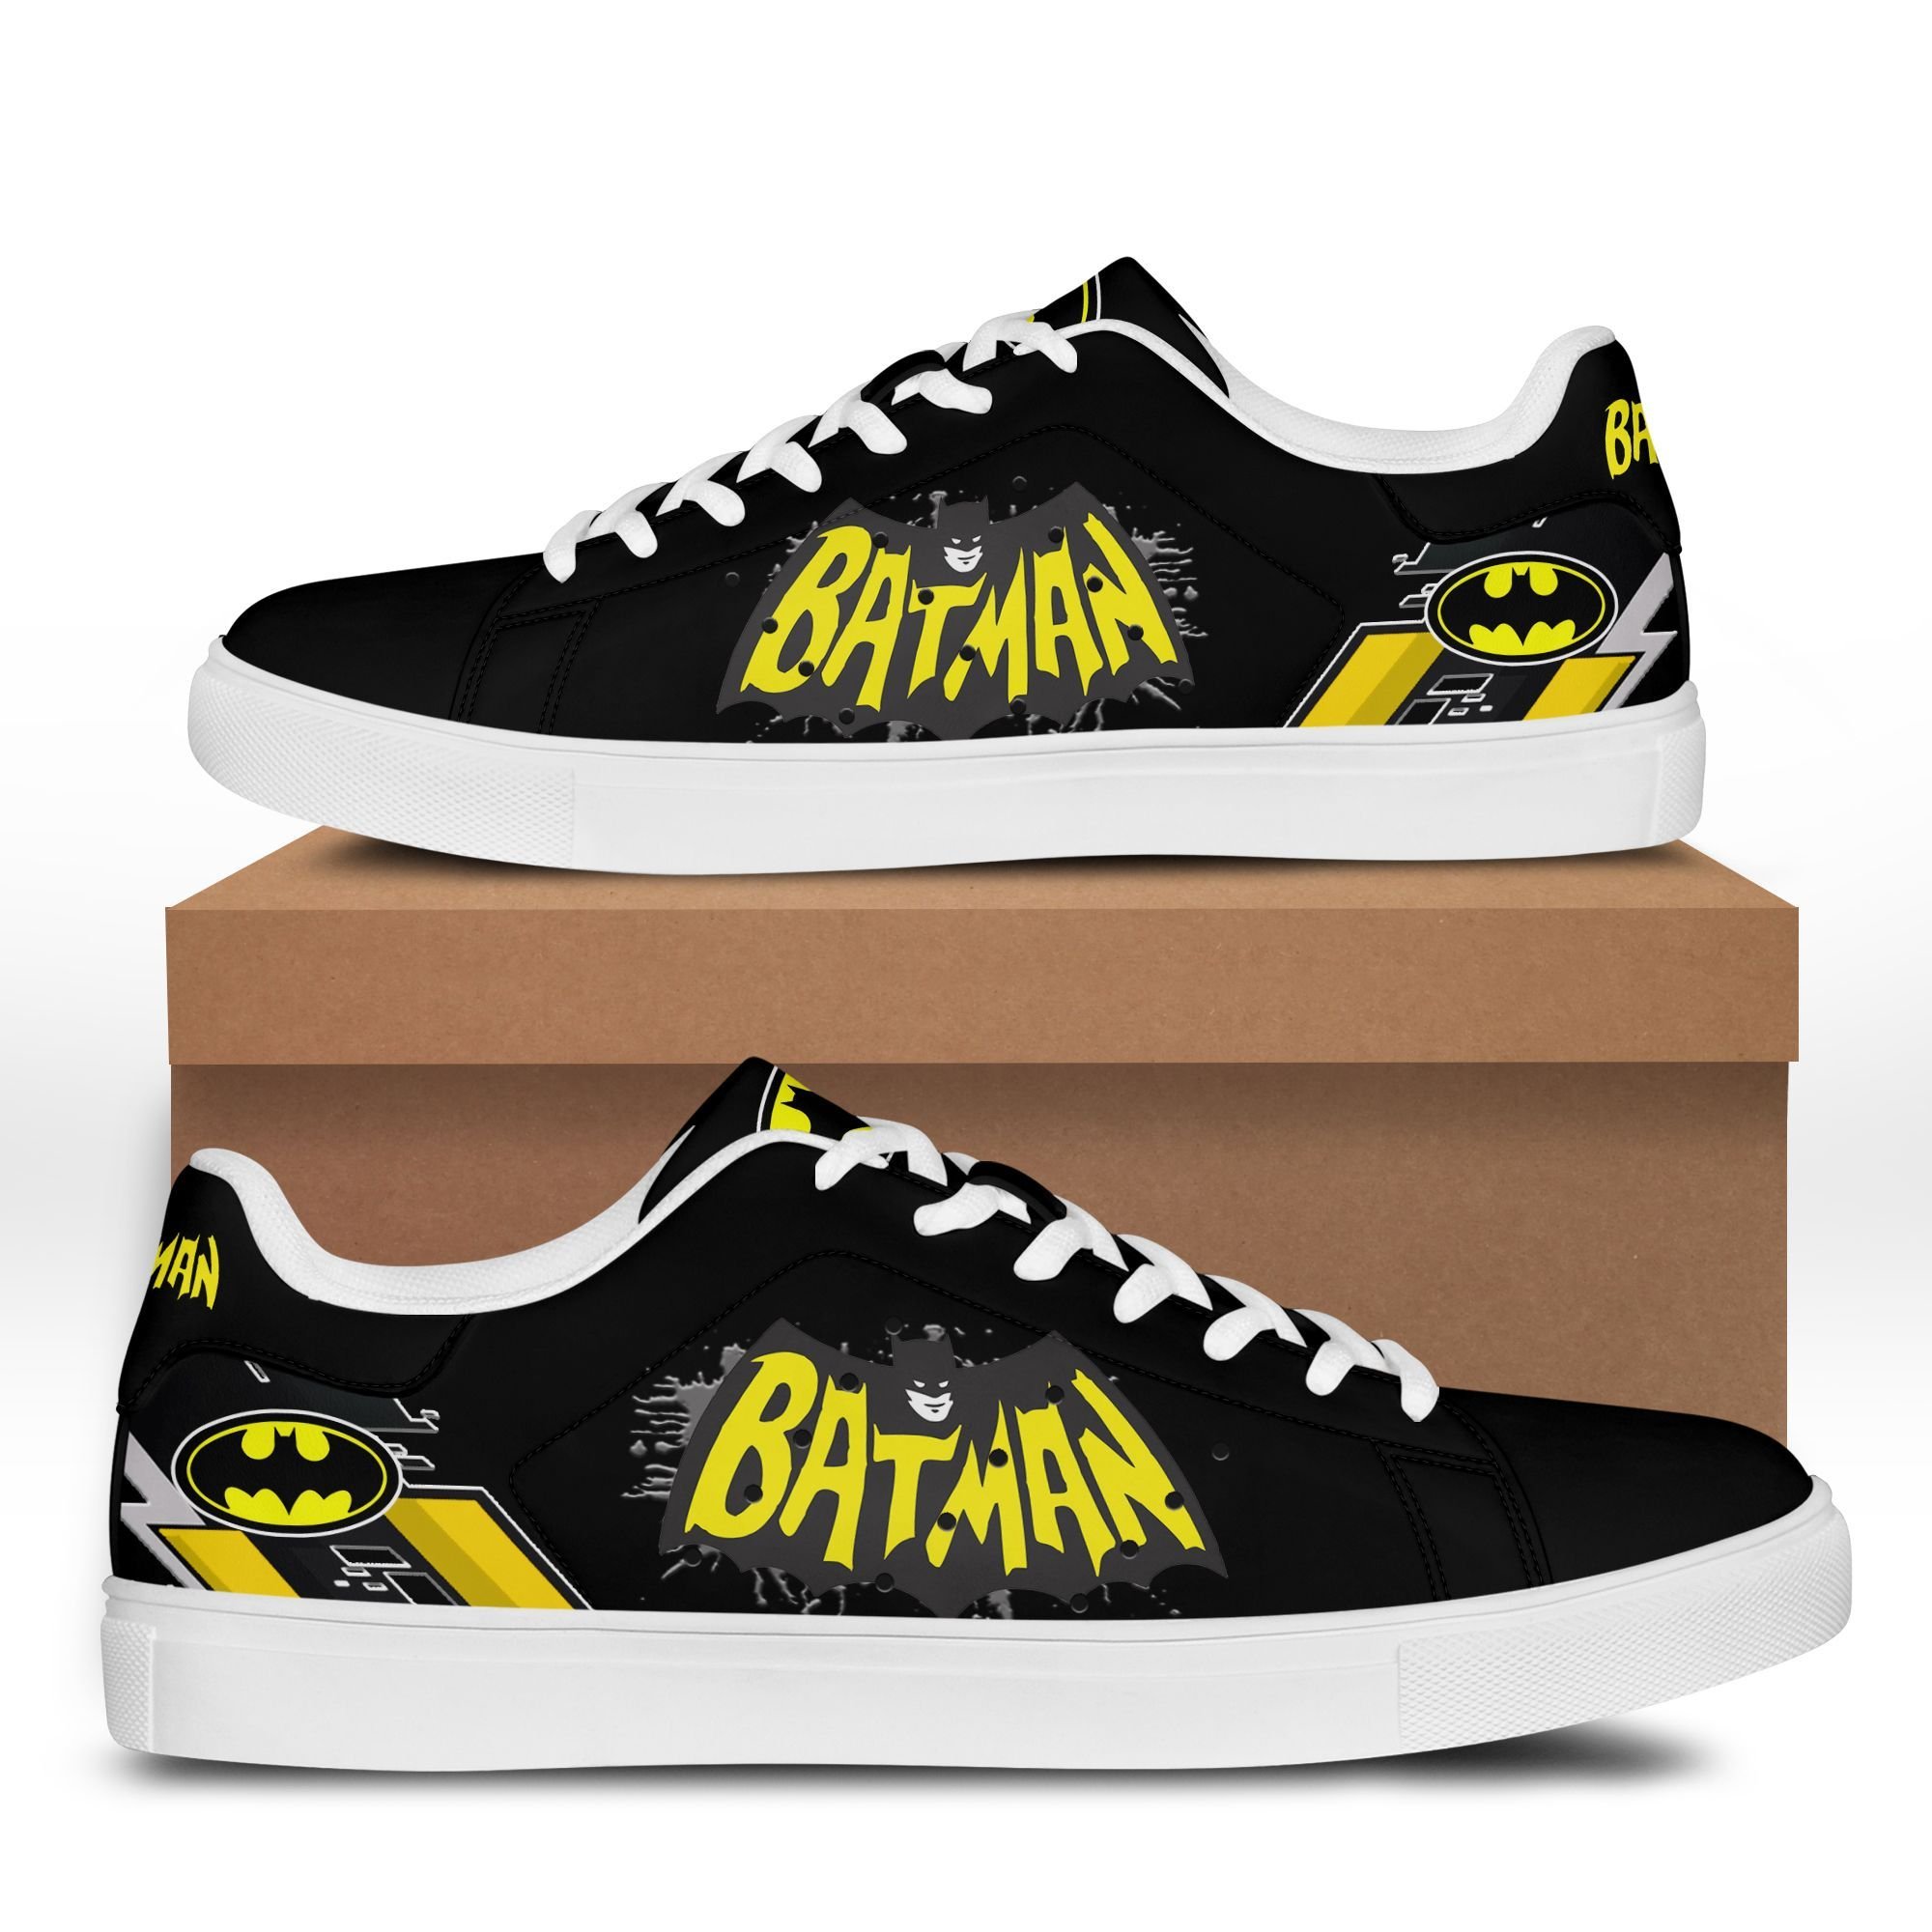 Batman Stan Smith low top shoes 8